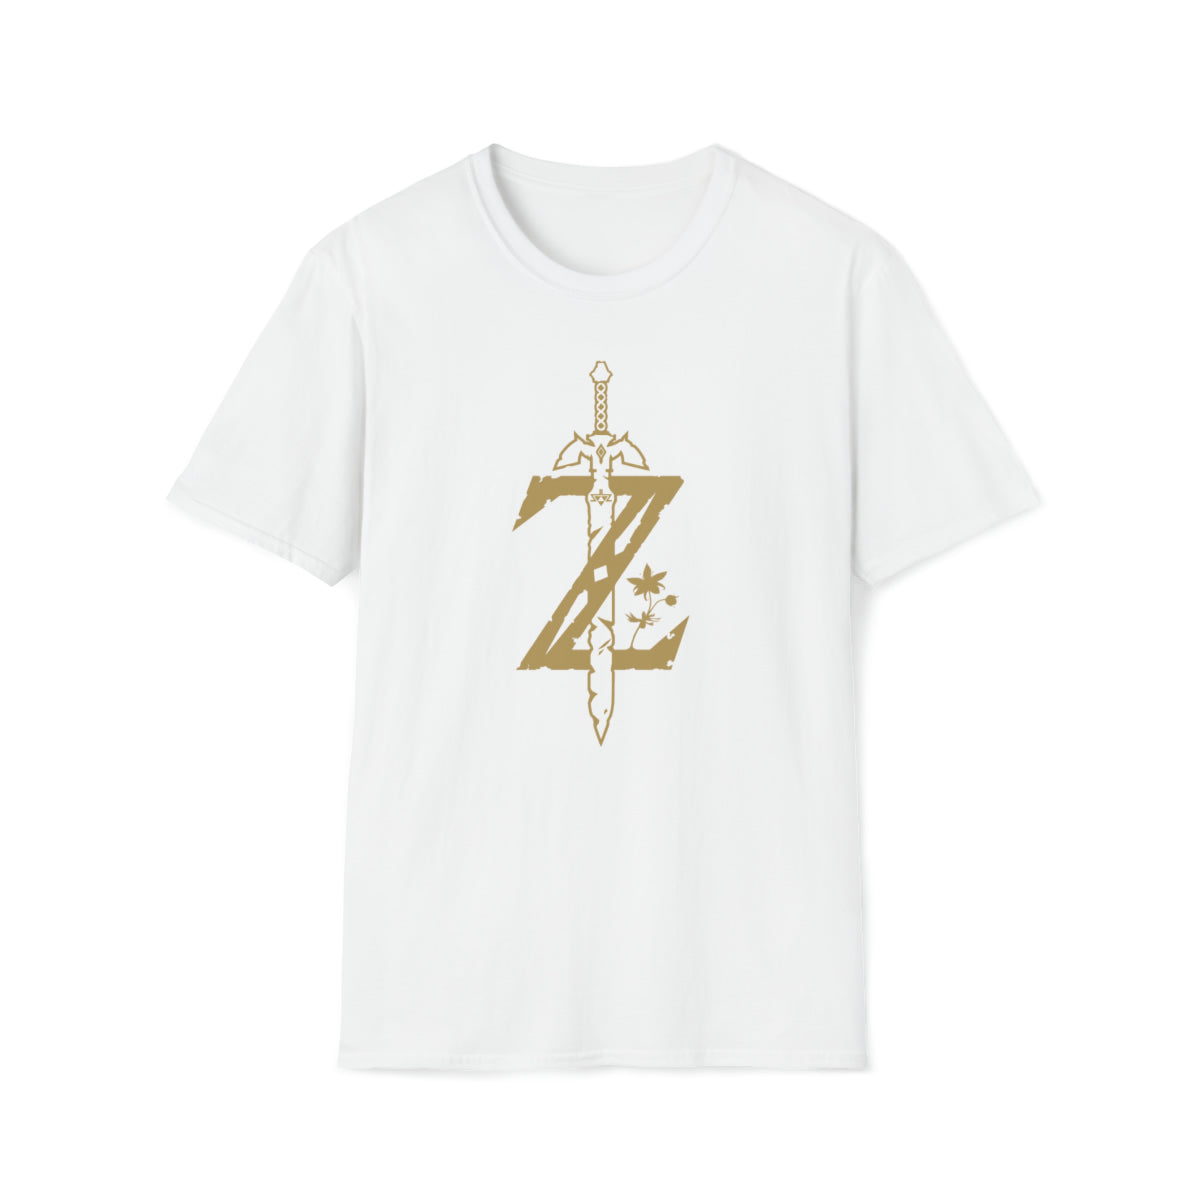 Zelda and the Master Sword - Short Sleeve Unisex Soft Style T-Shirt